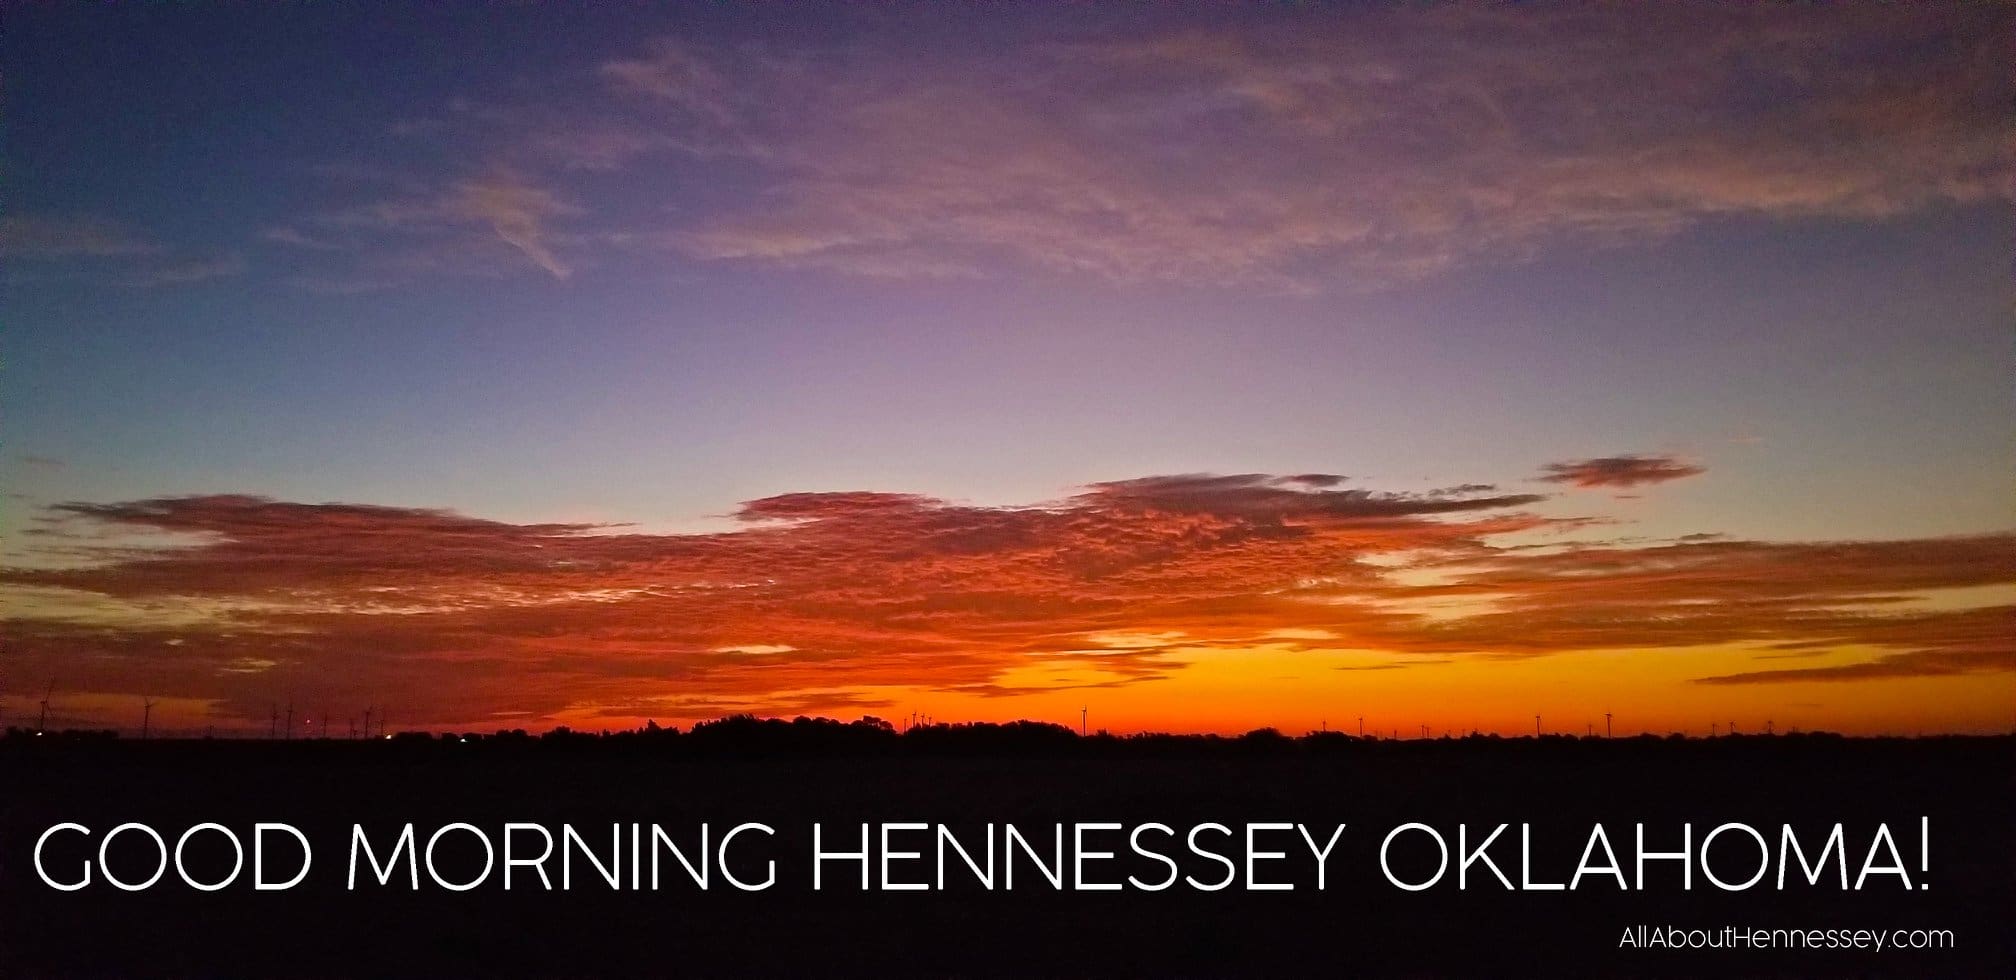 GOOD MORNING HENNESSEY OKLAHOMA!